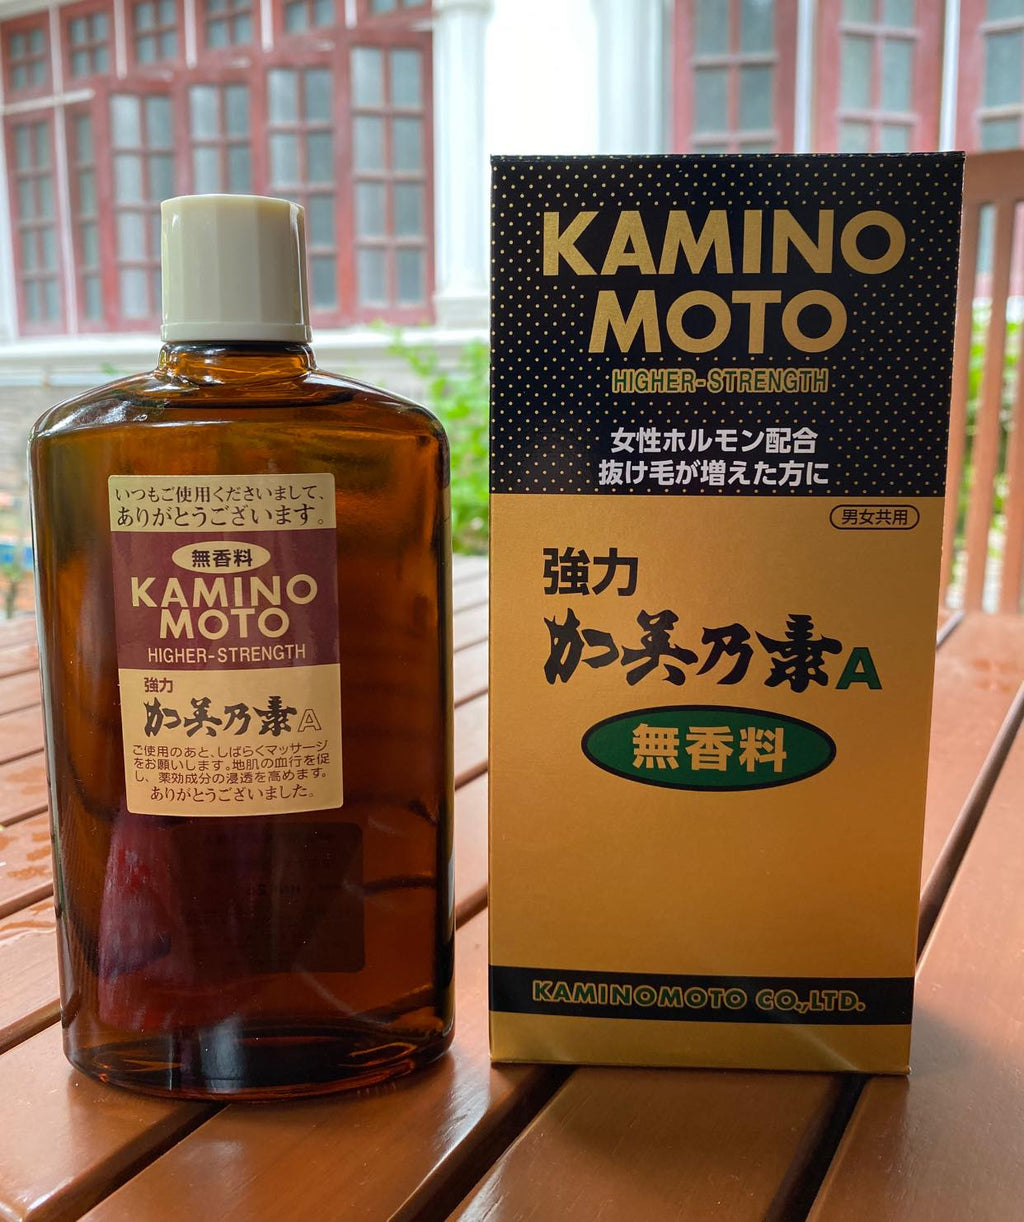 Kaminomoto Hair tonic for hair growth